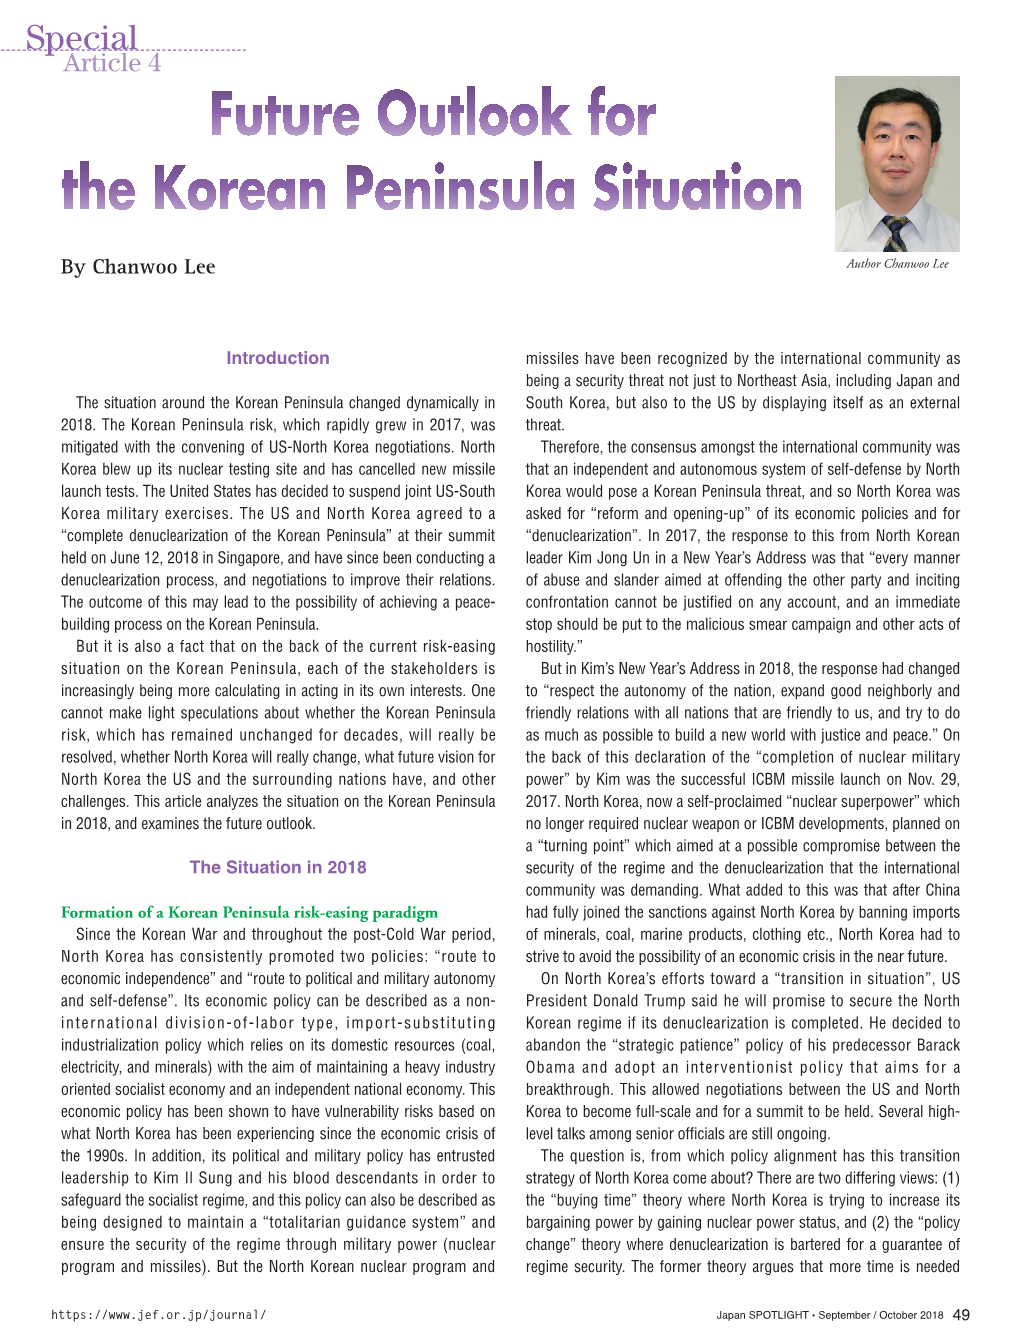 Future Outlook for the Korean Peninsula Situation